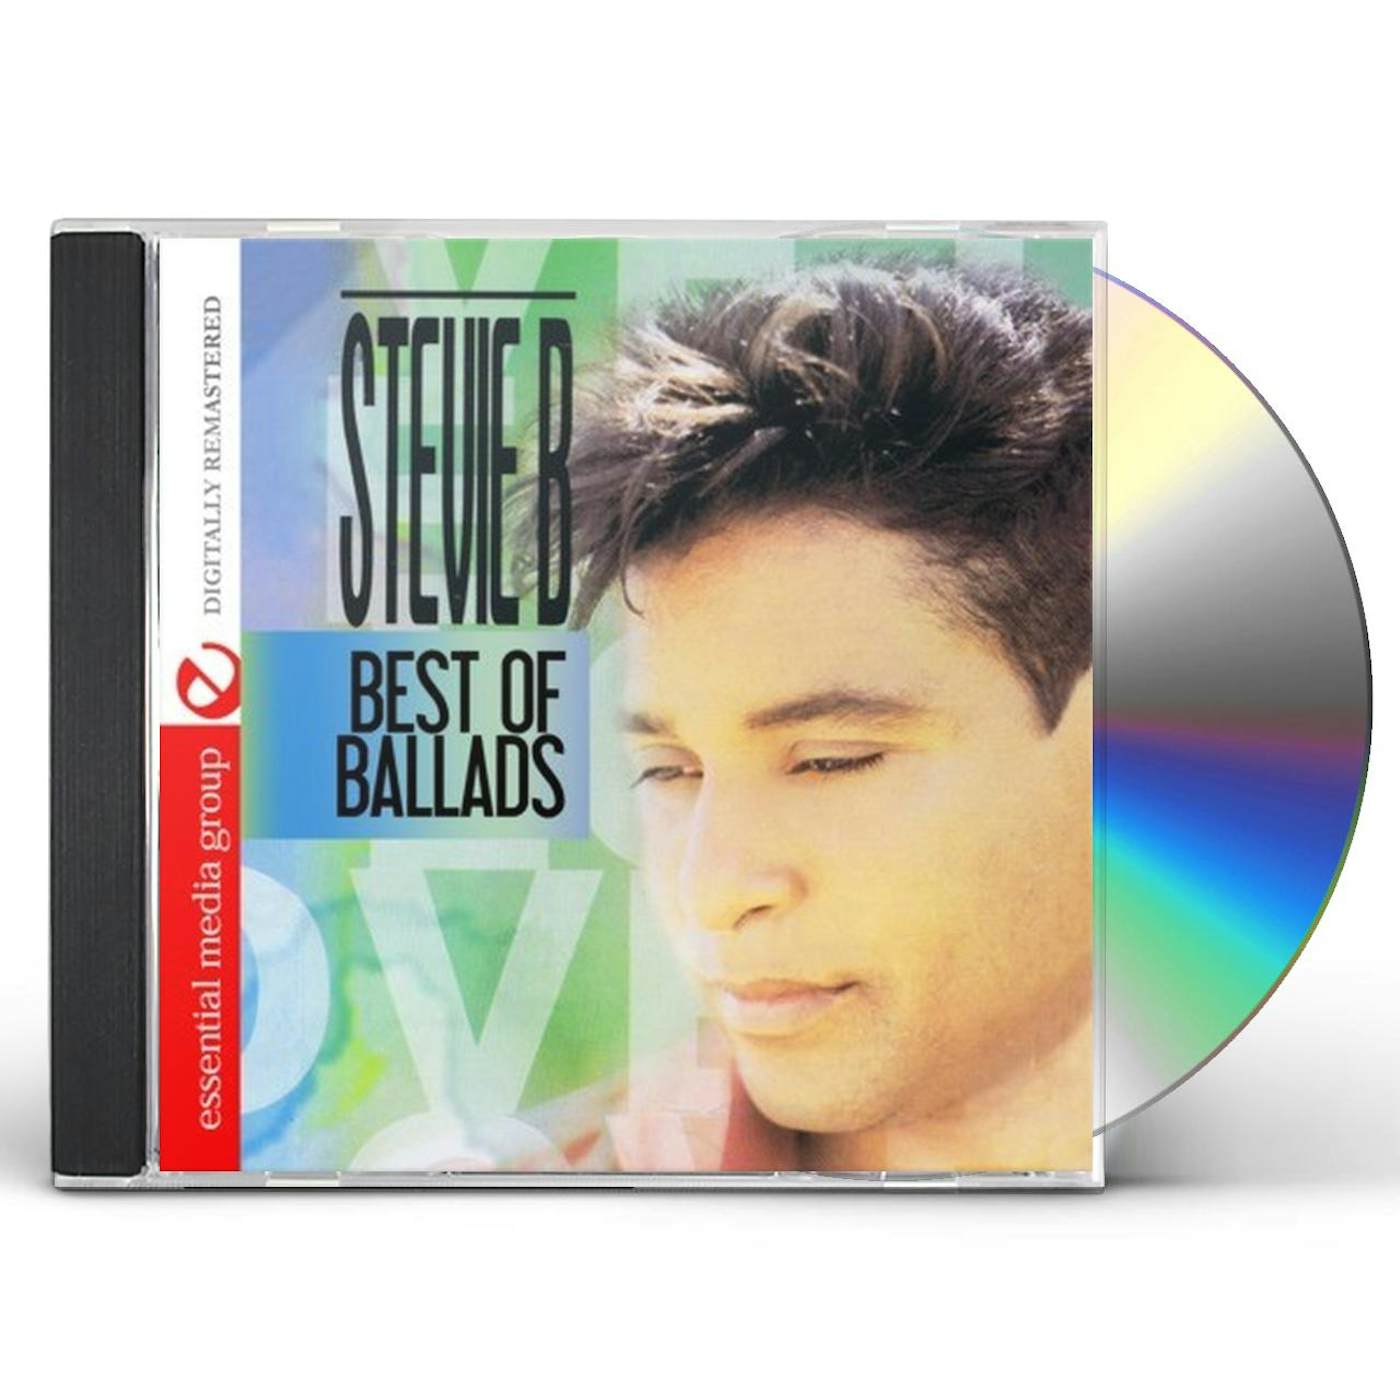 Stevie B BEST OF BALLADS CD